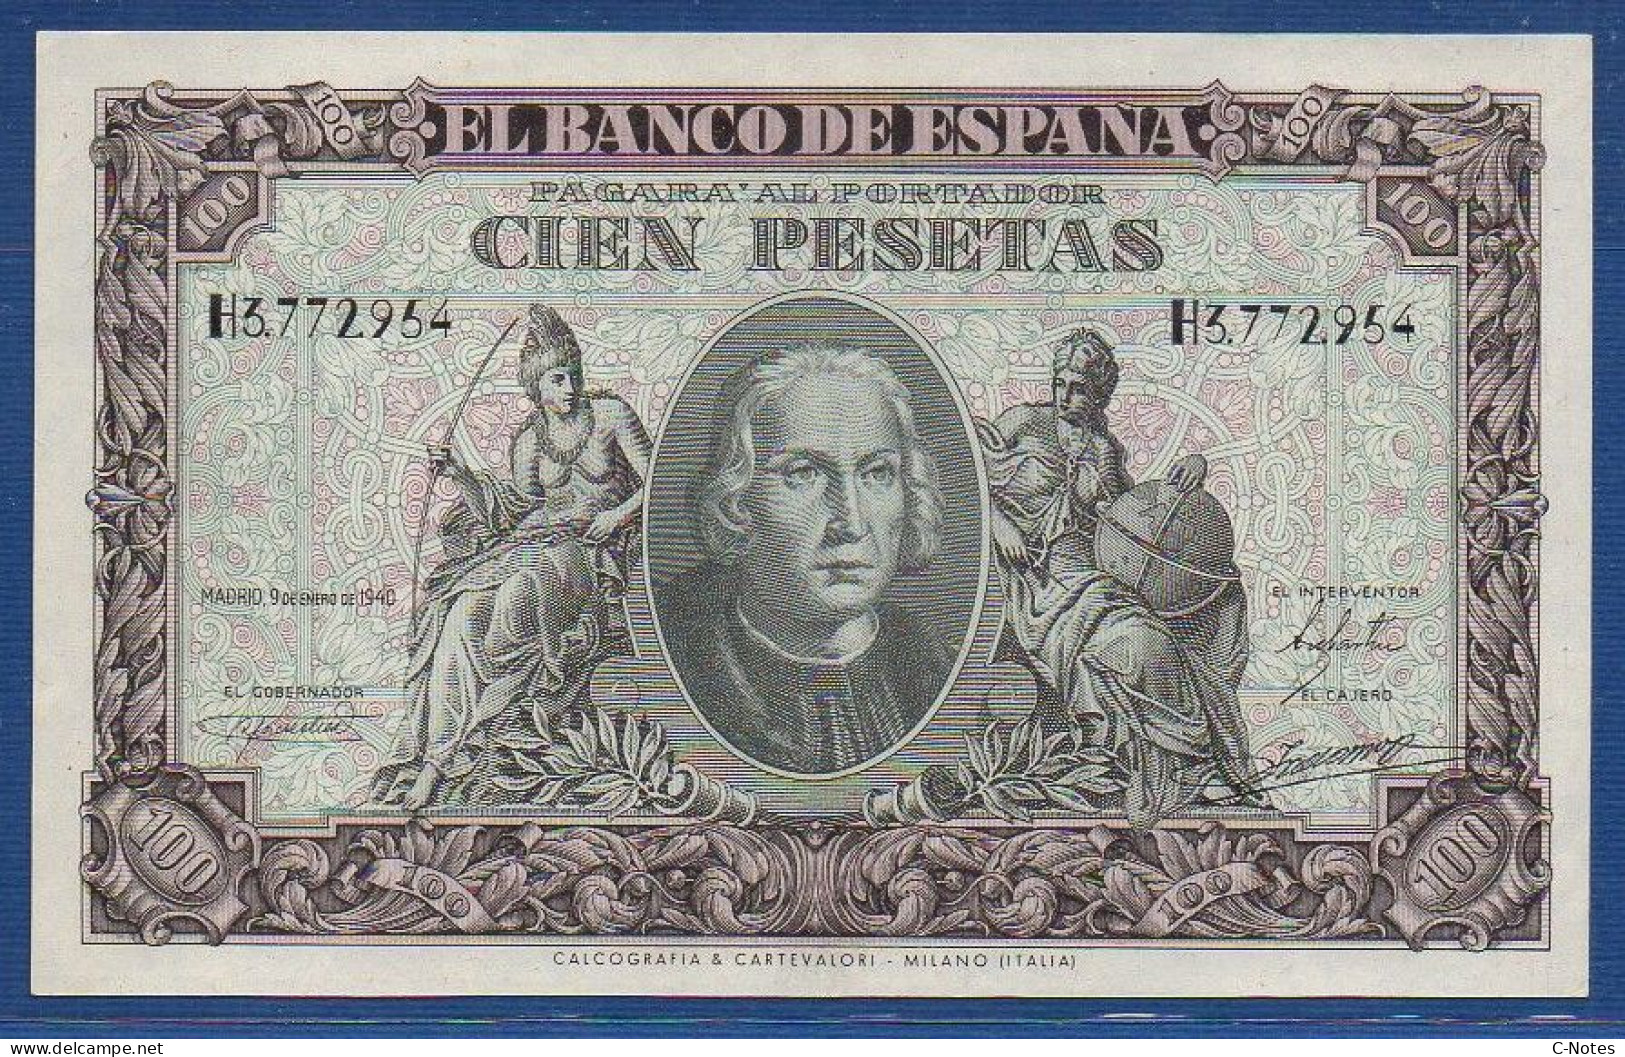 SPAIN - P.118 – 100 PESETAS 1940 AUNC, S/n H3.772.954 - 100 Pesetas